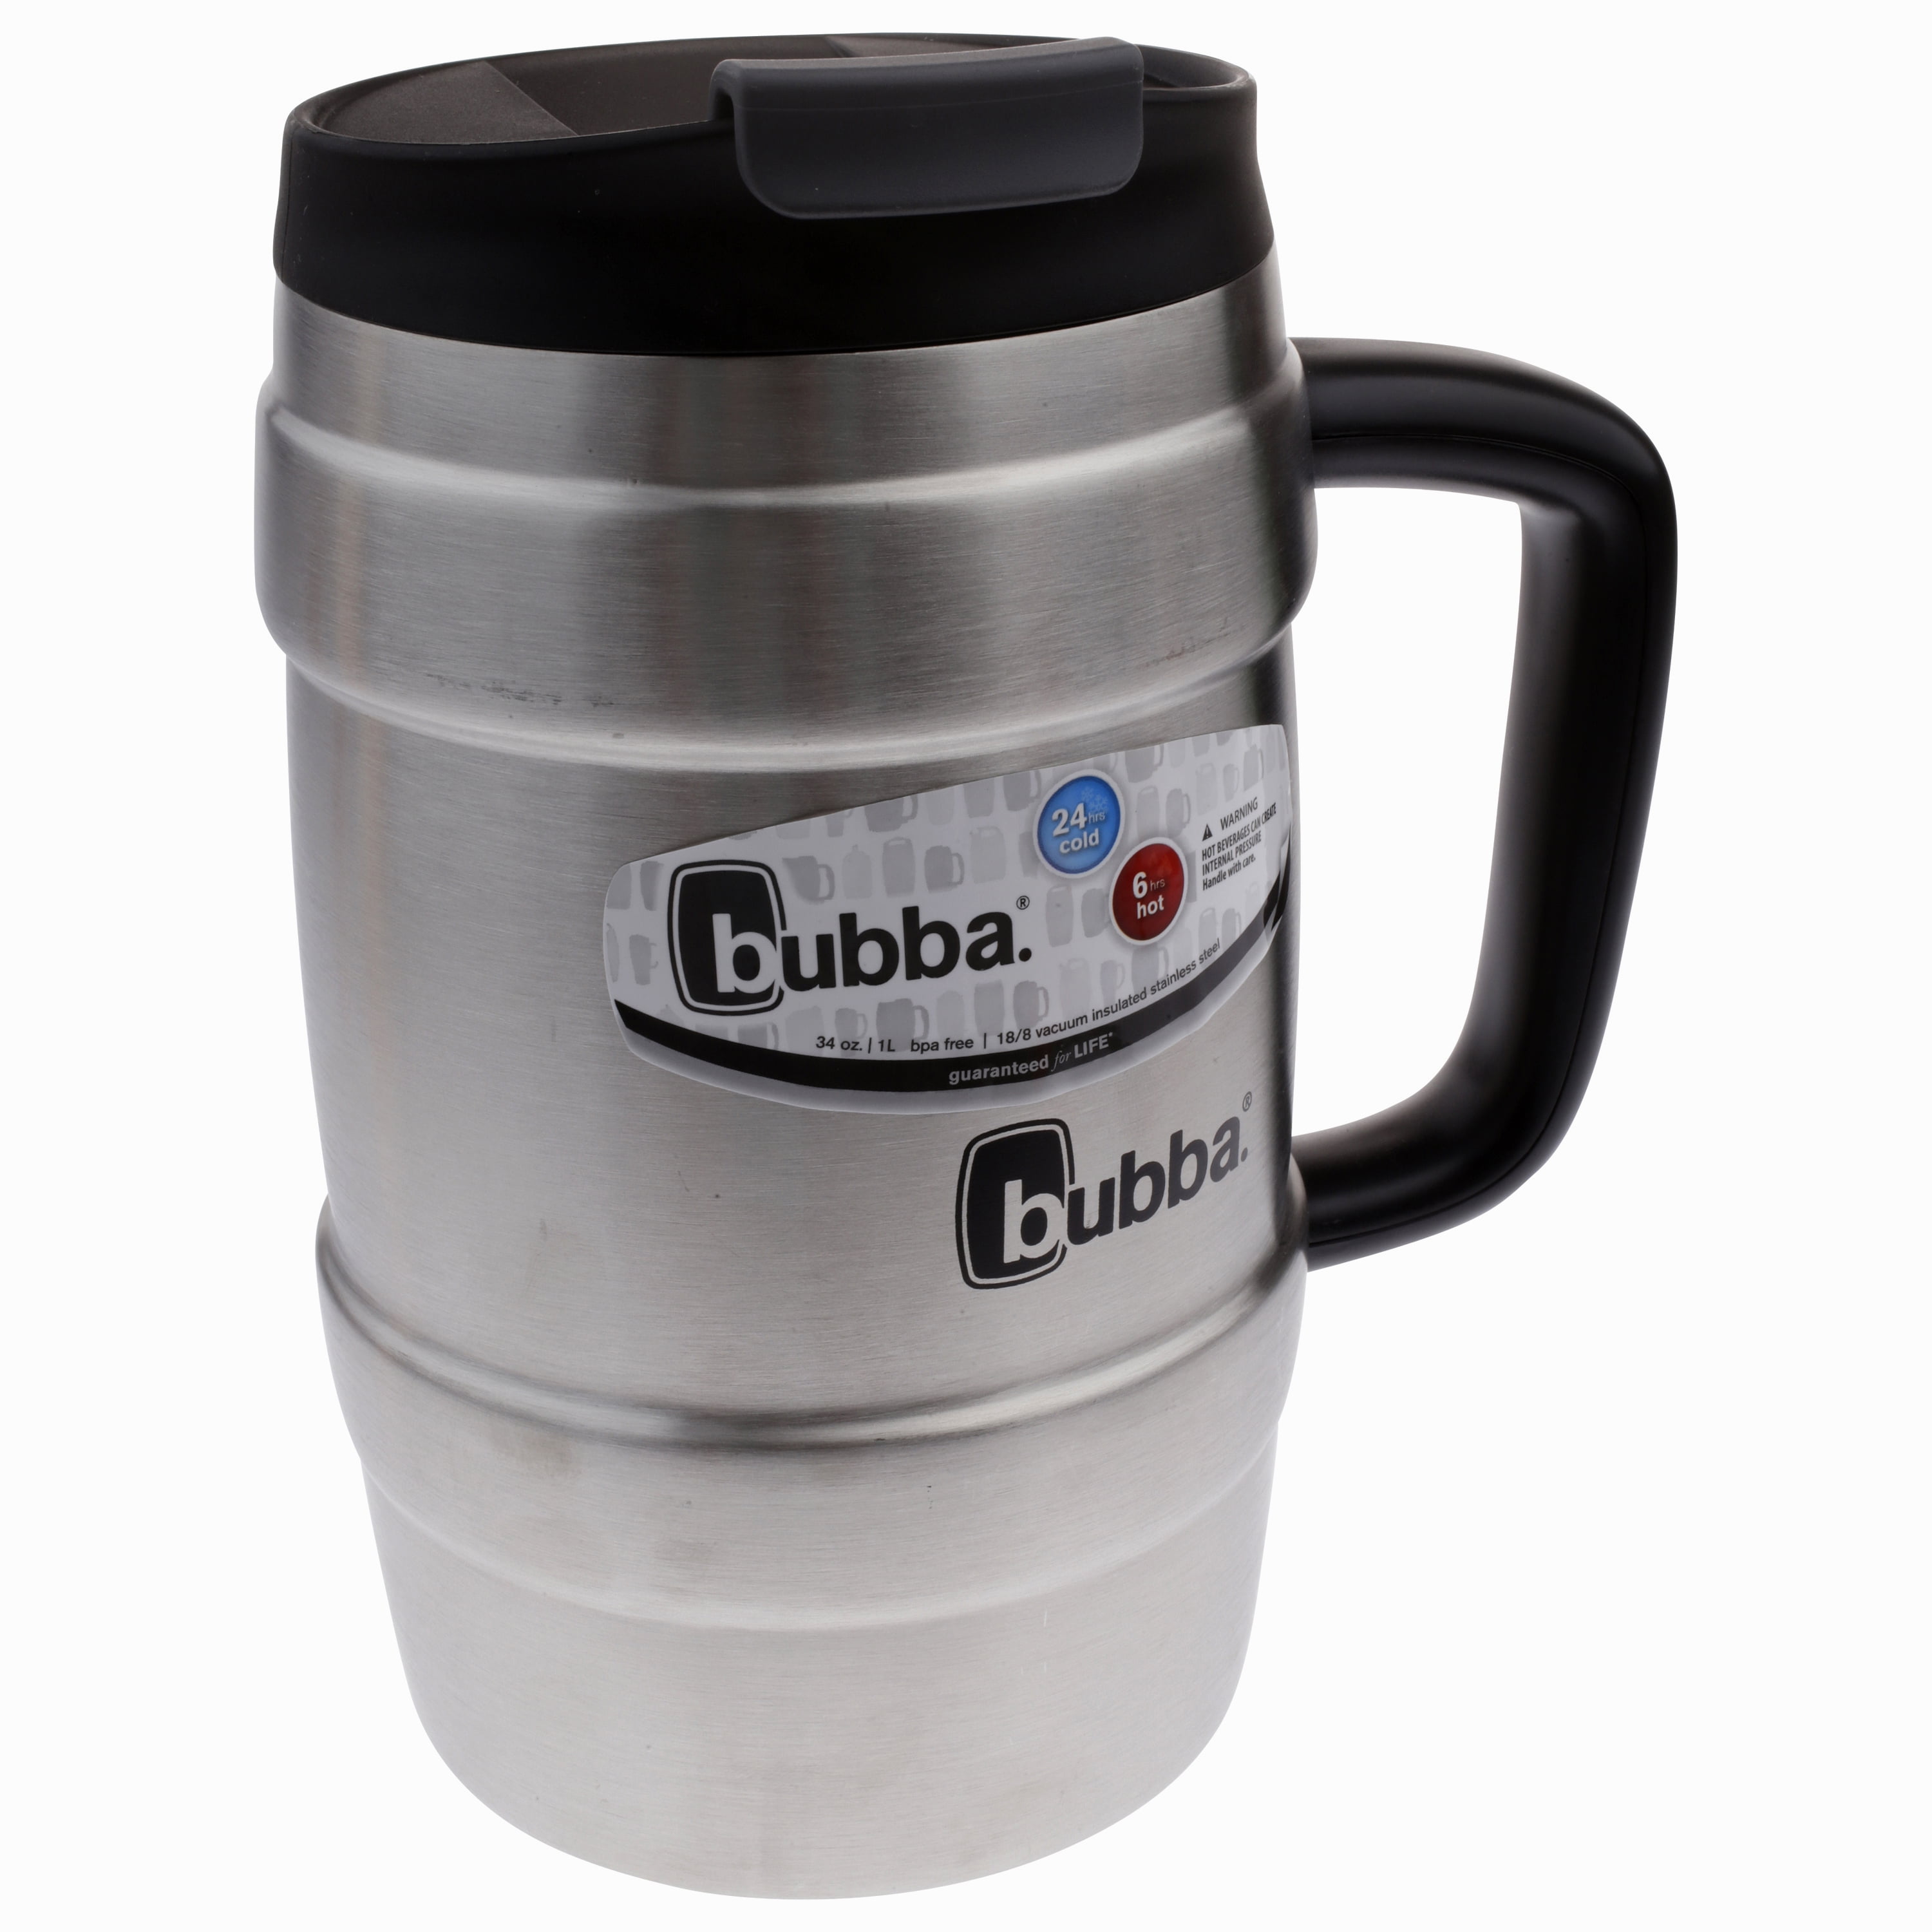 bubba Keg 20 Oz bubba Grub Travel Food Storage Thermos for sale online